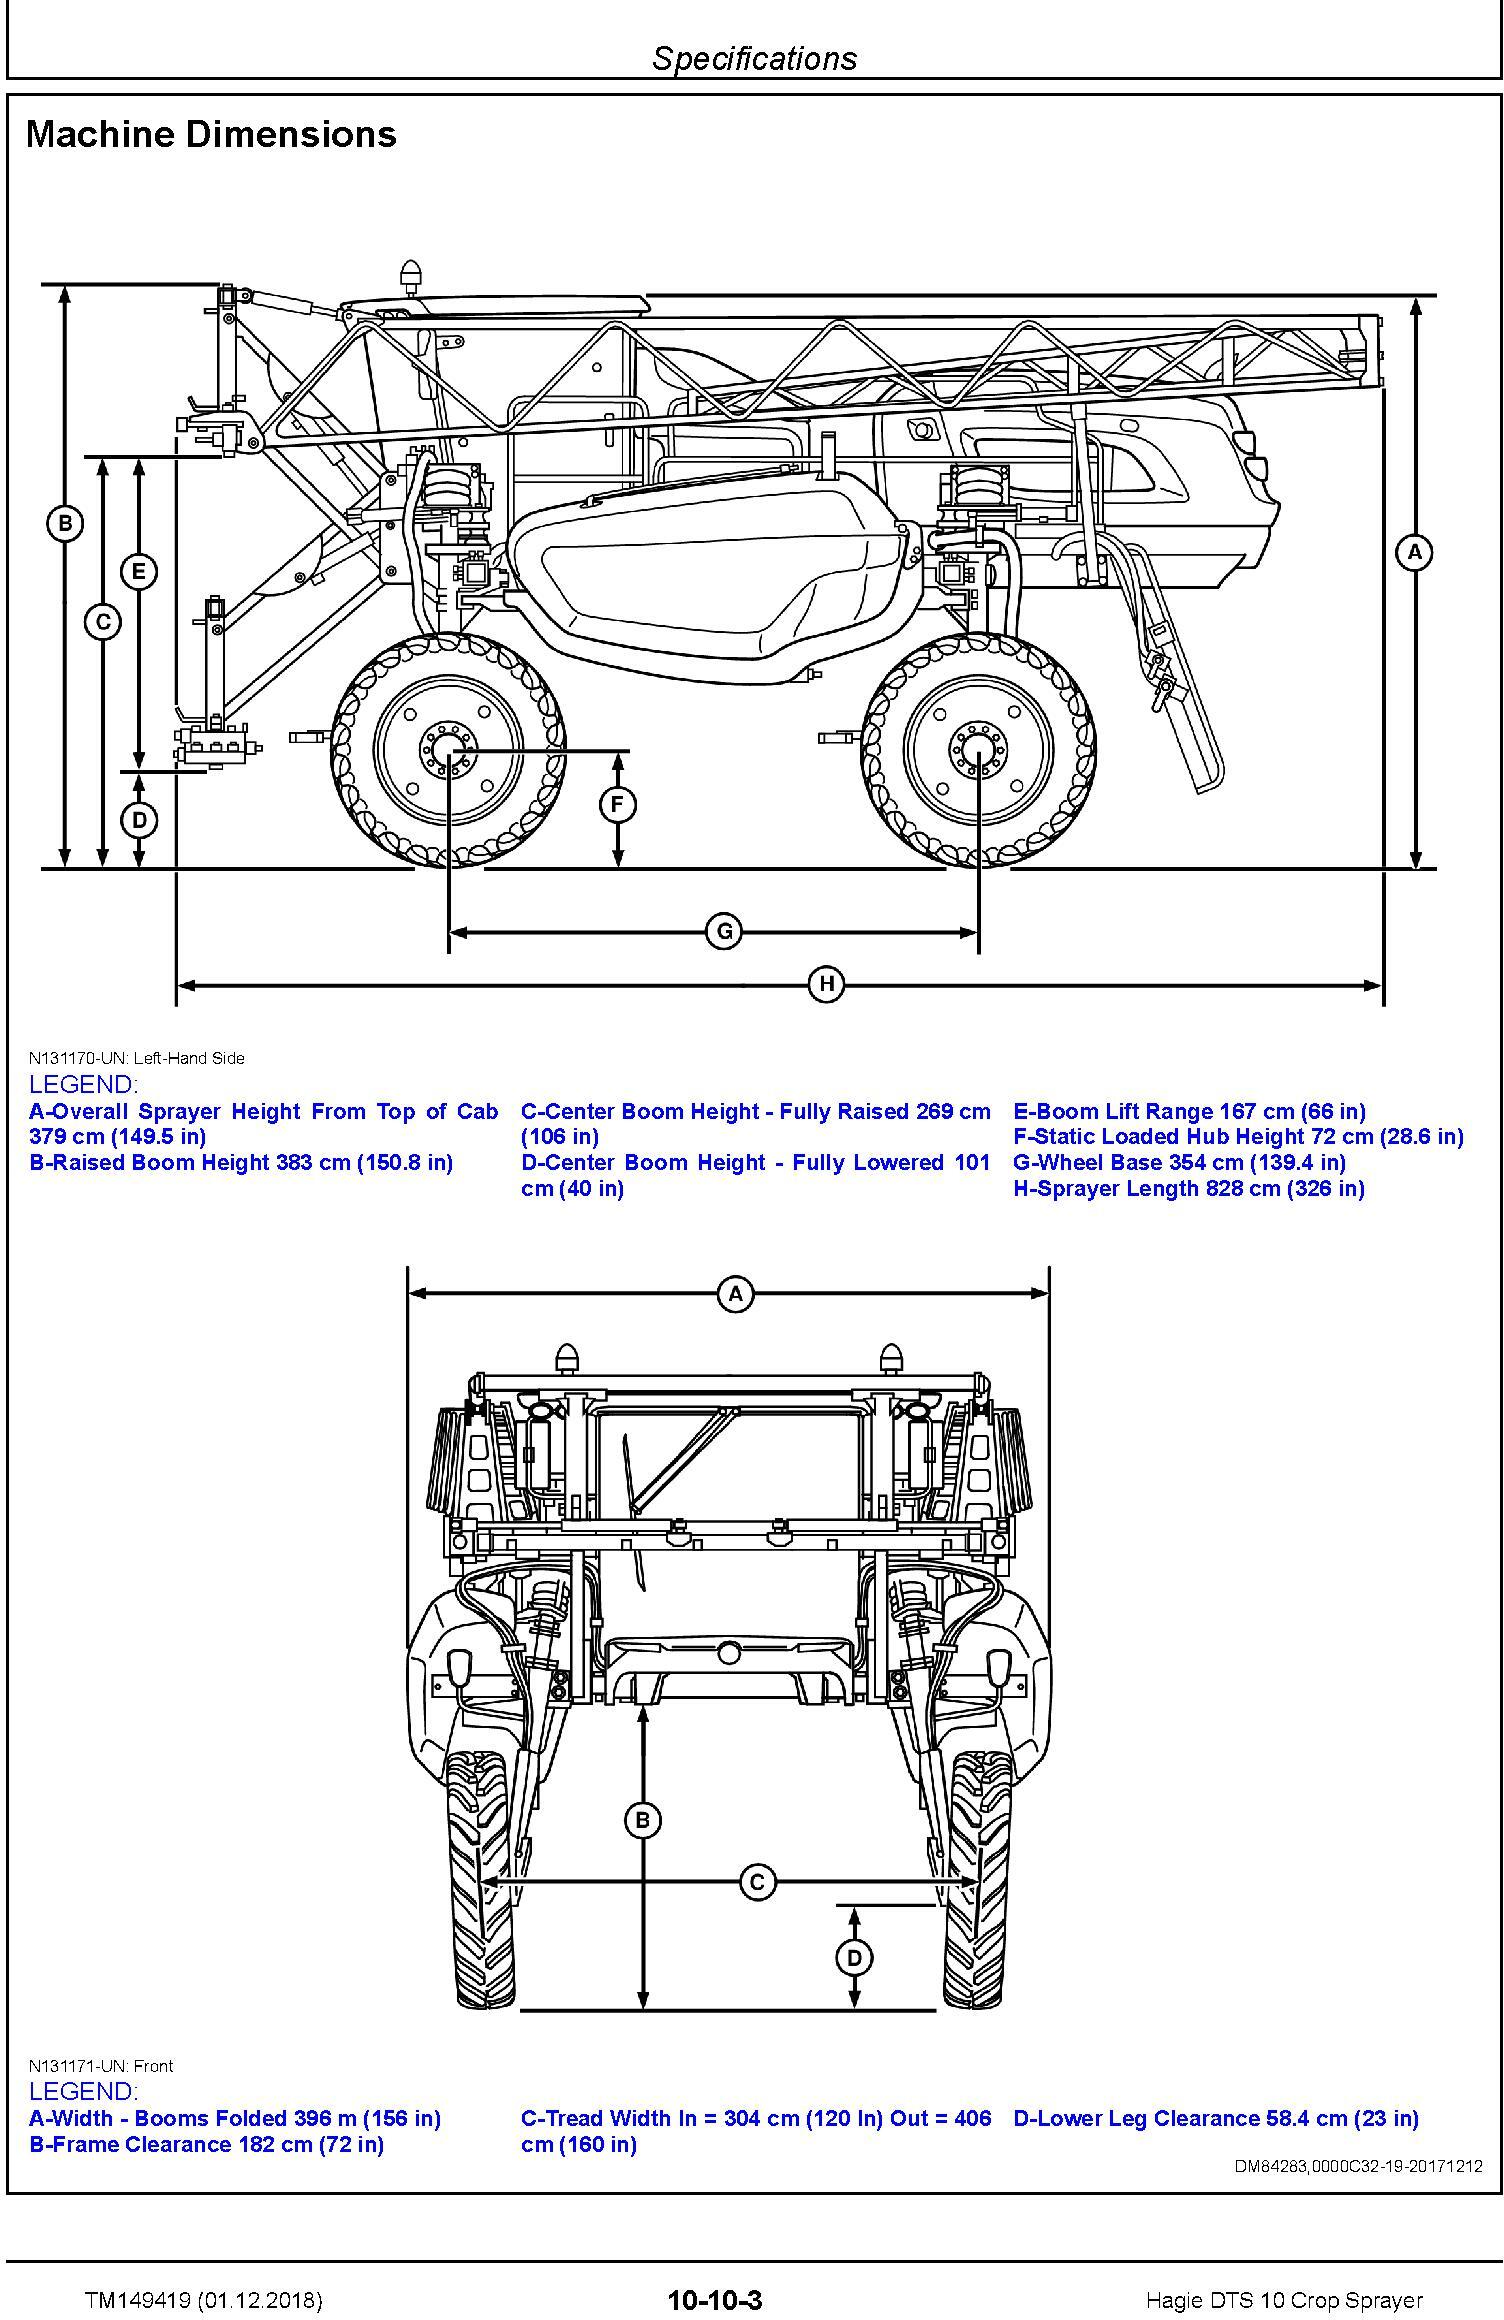 Hagie DTS 10 Crop Sprayer Repair Technical Manual (TM149419) - 1